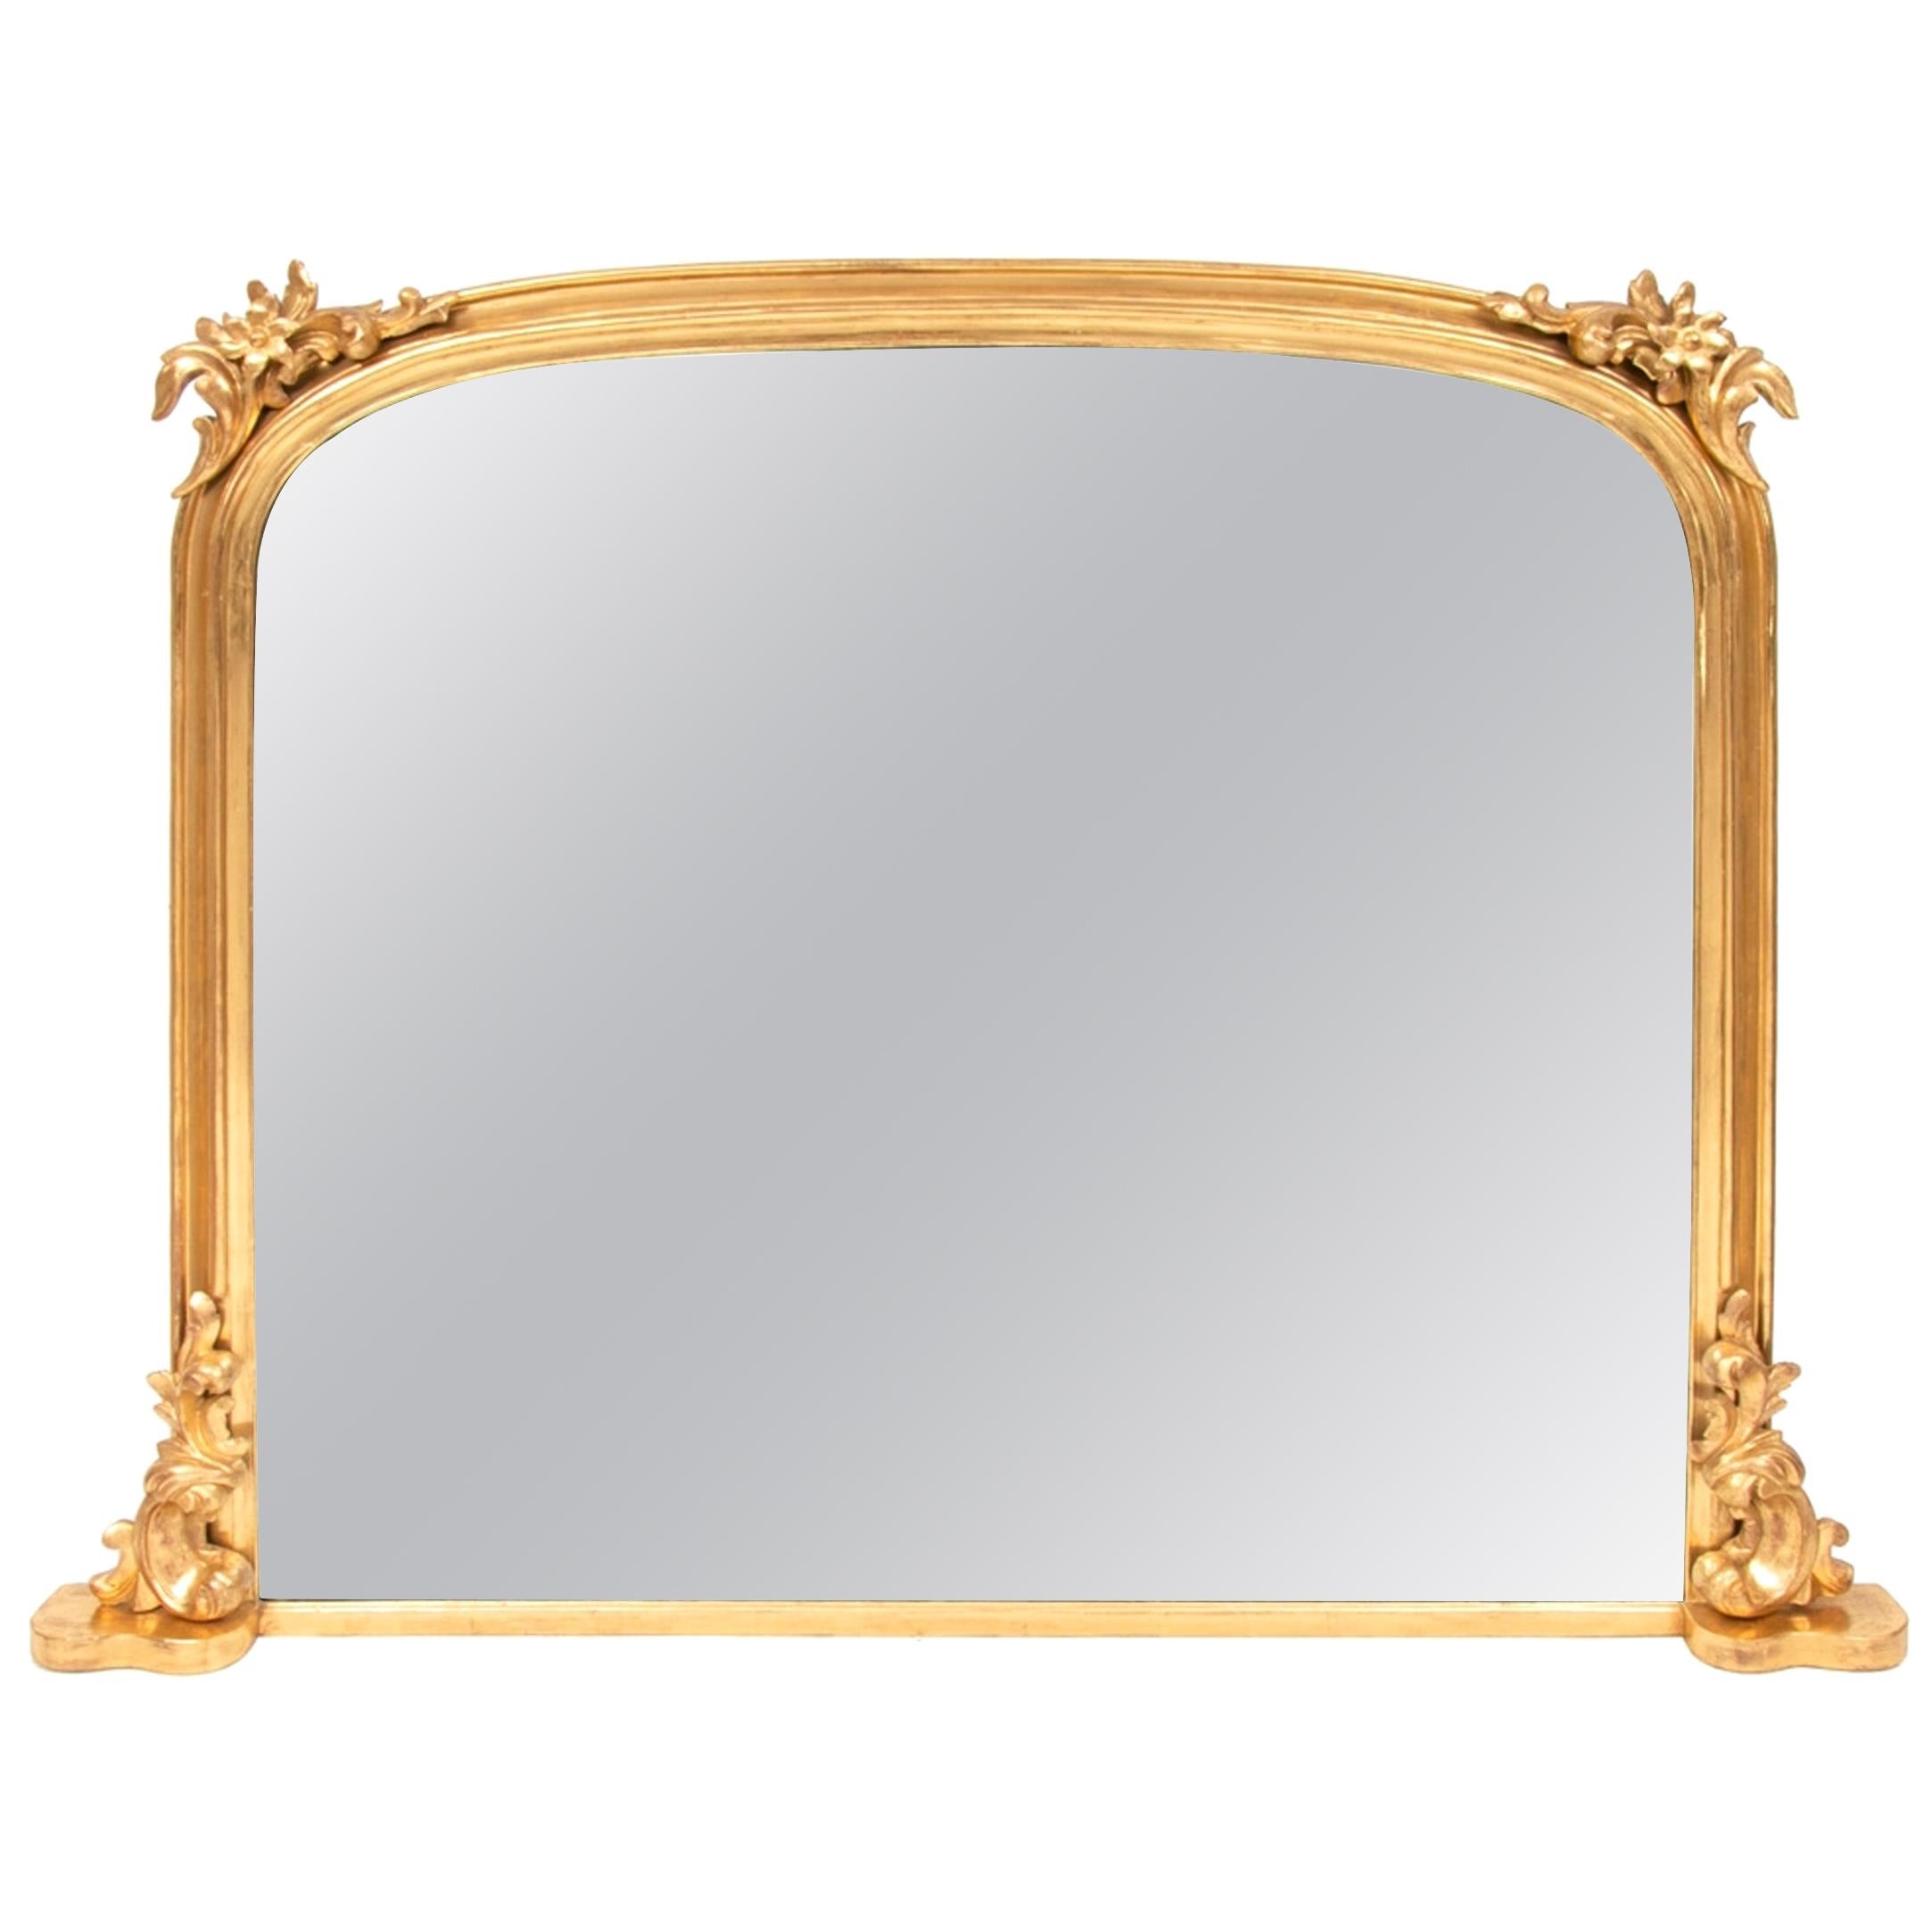 Antique Gilded Overmantle Mirror, circa 1840